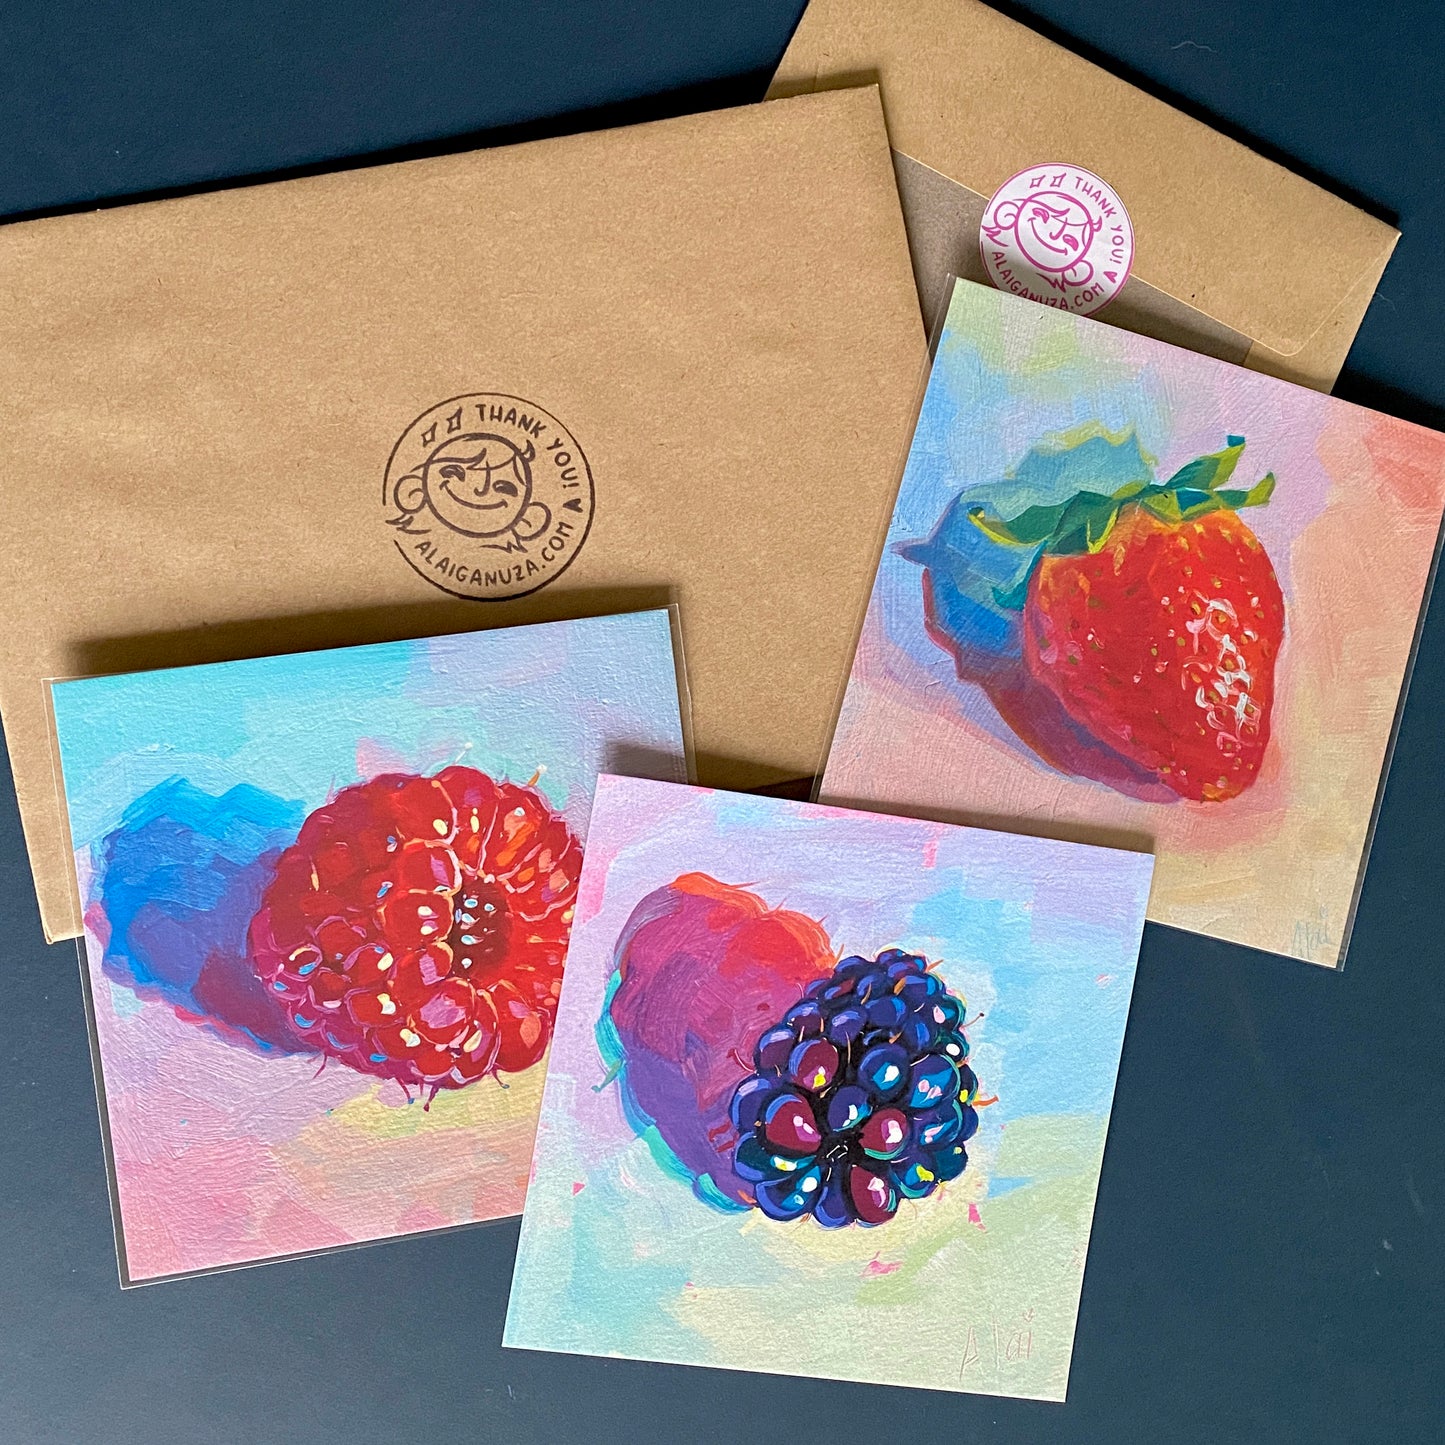 Berries - Mini Print Set